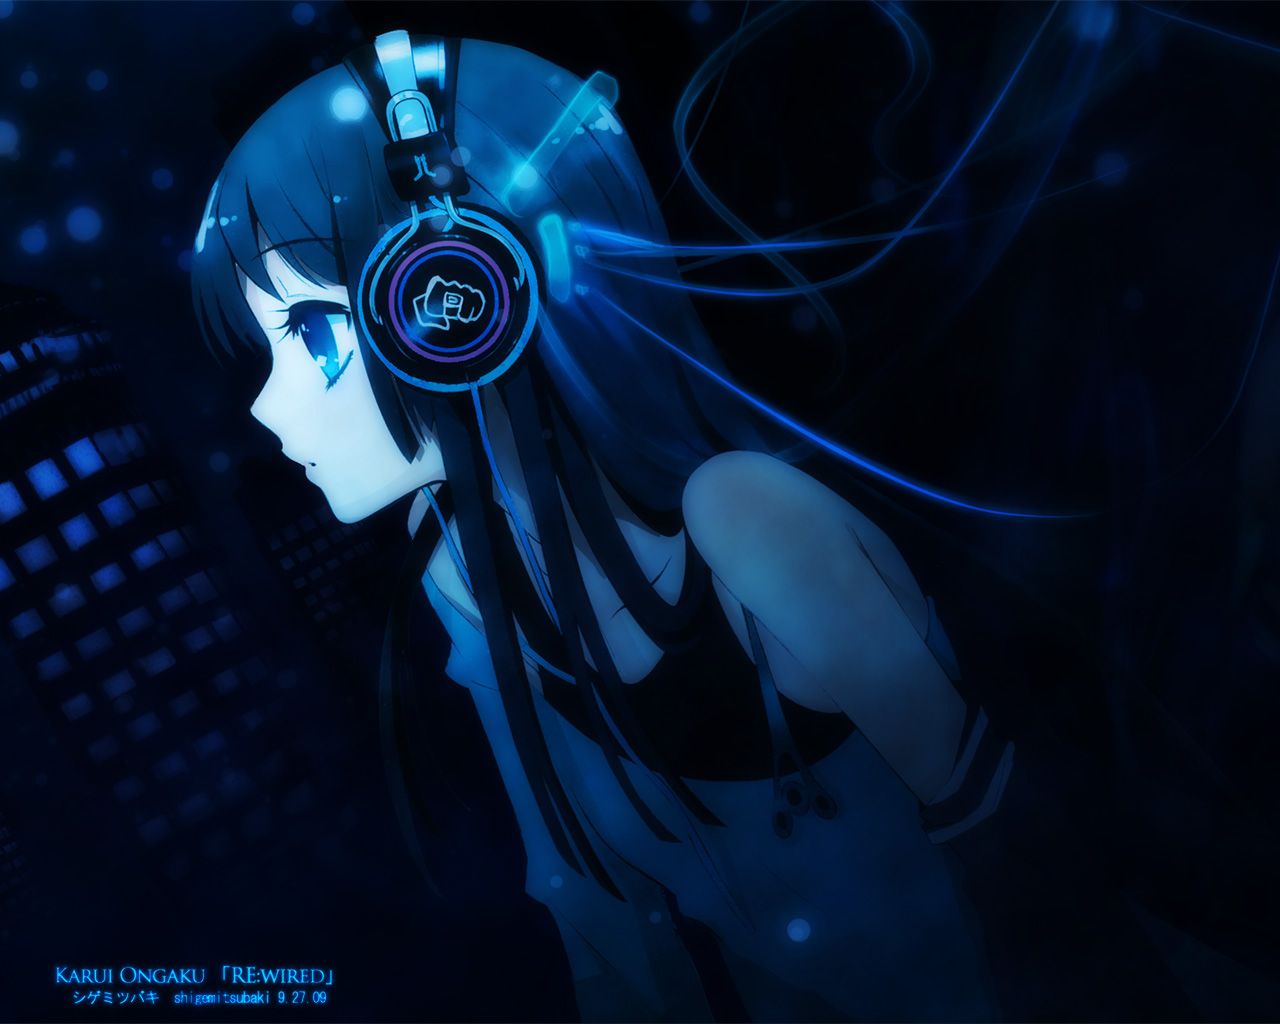 Cool Music Anime HD Wallpaper .wallpapertip.com